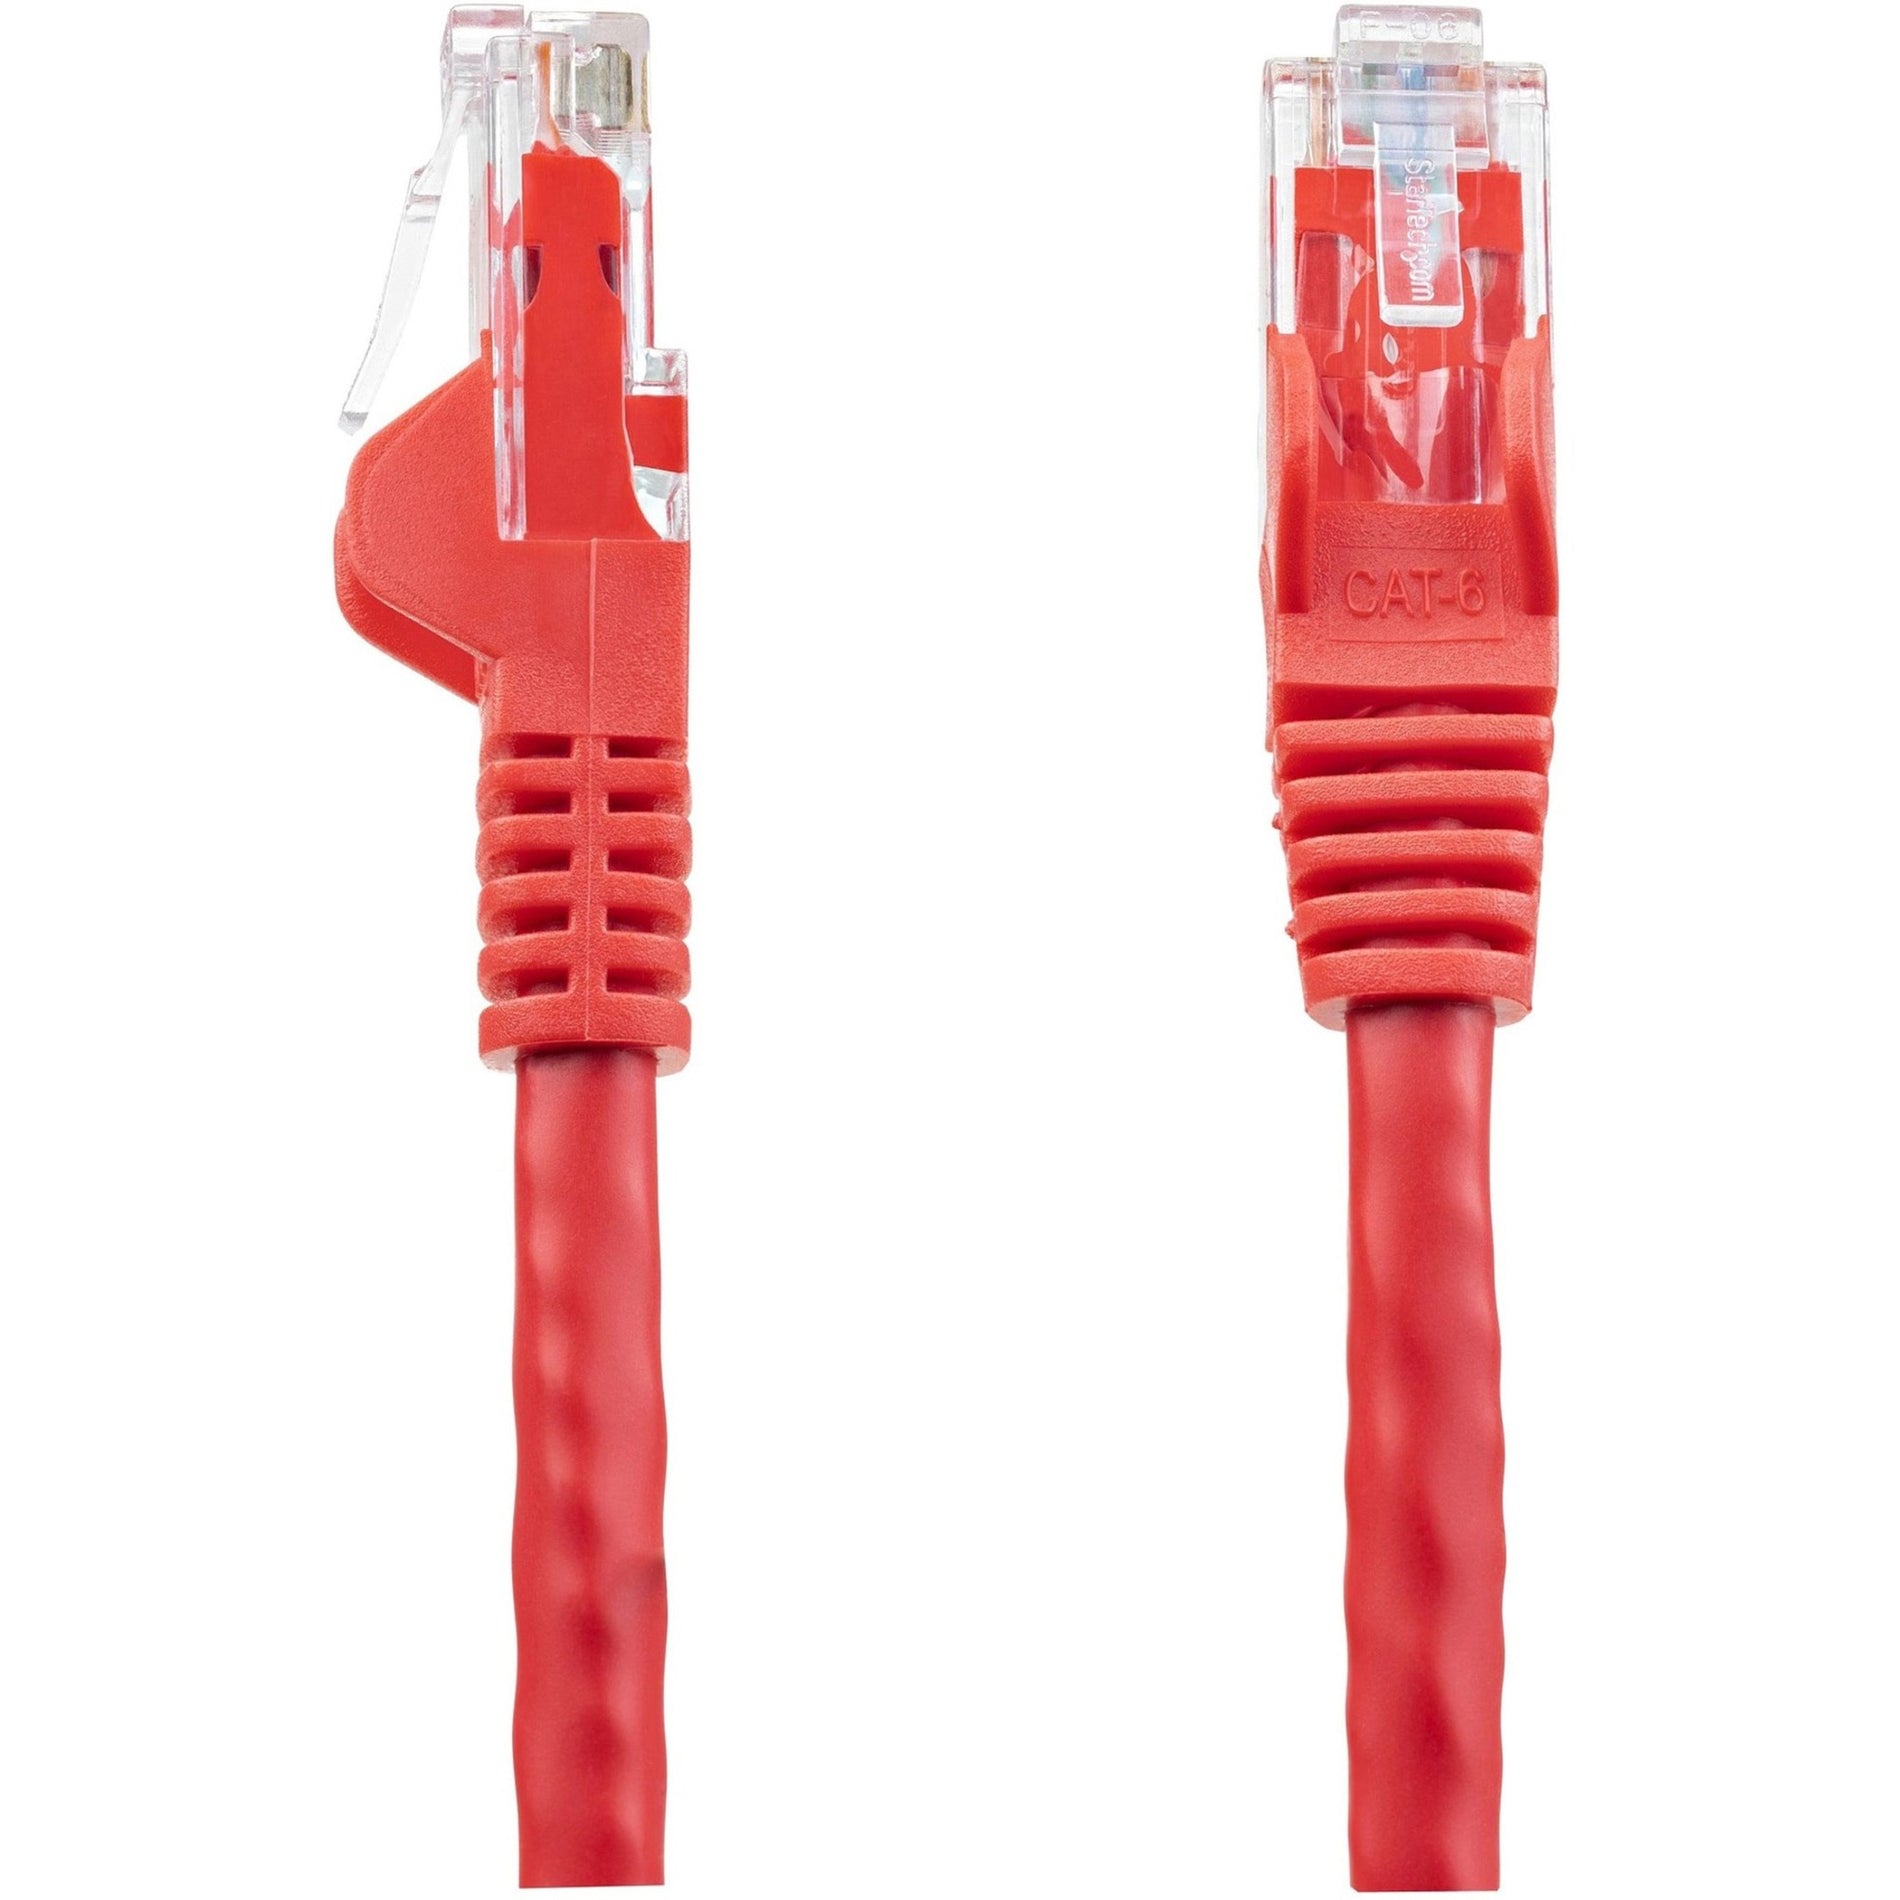 StarTech.com N6PATCH30RD Cat. 6 Netzwerkkabel 30ft Rotes Ethernet-Kabel Snagless RJ45 Stecker